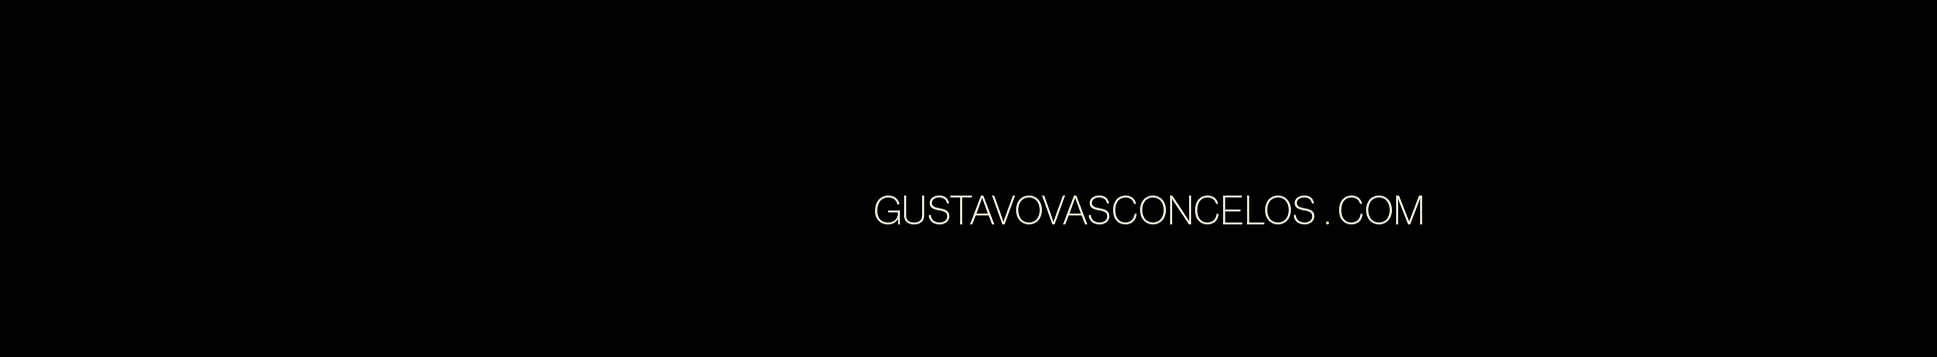 Gustavo Vasconcelos's profile banner